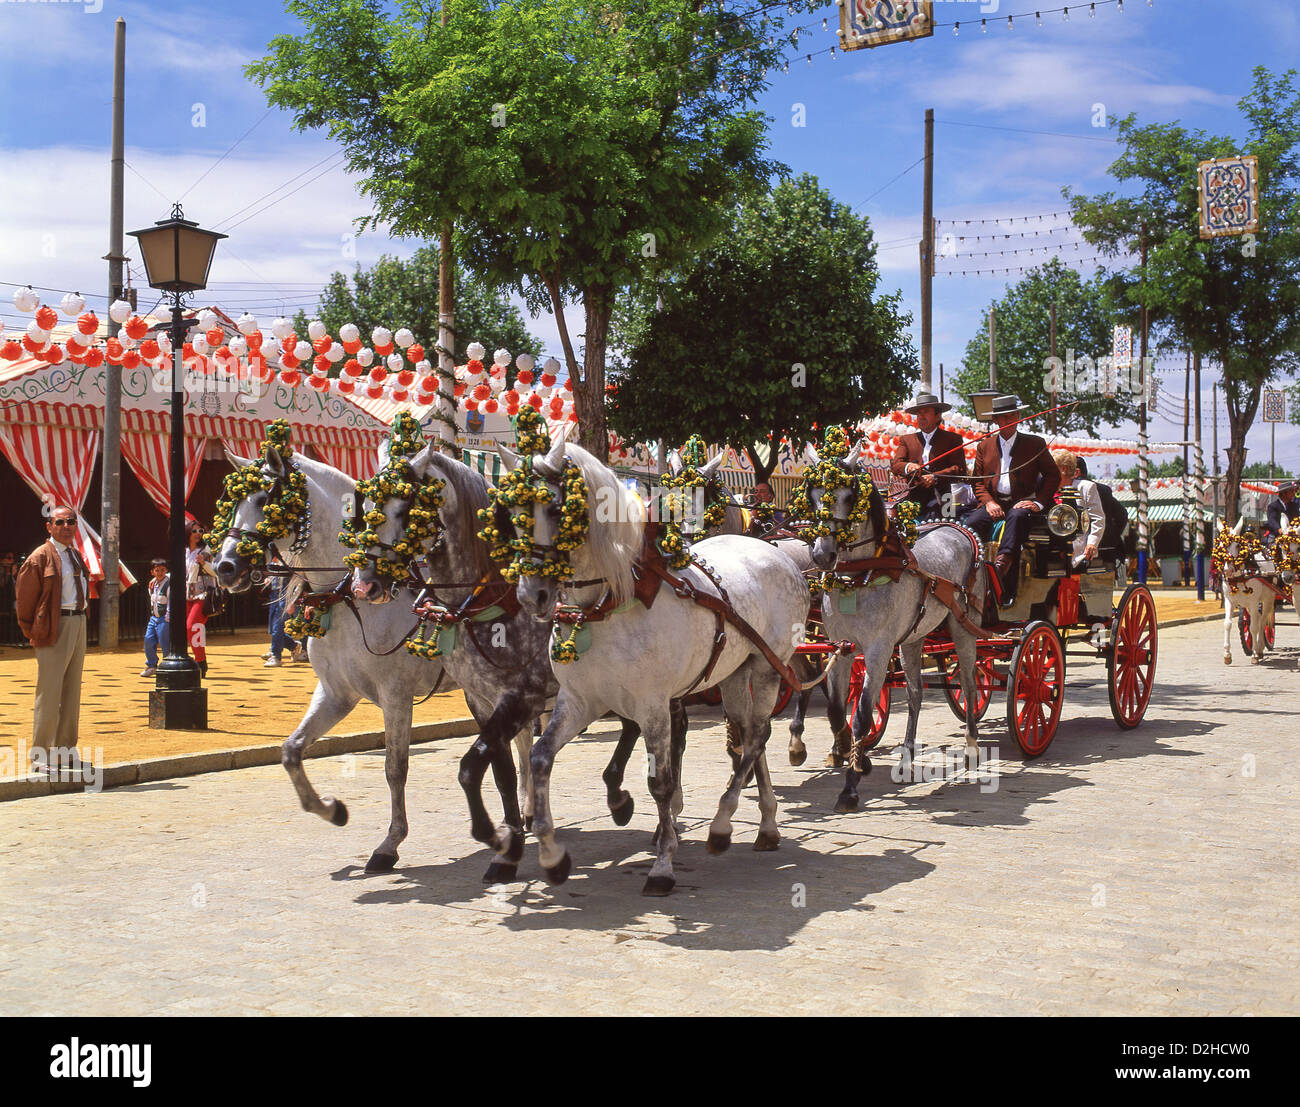 Decorated horse carriage at Feria de abril de Sevilla (Seville April Fair), Seville, Sevilla Province, Andalucia, Spain Stock Photo